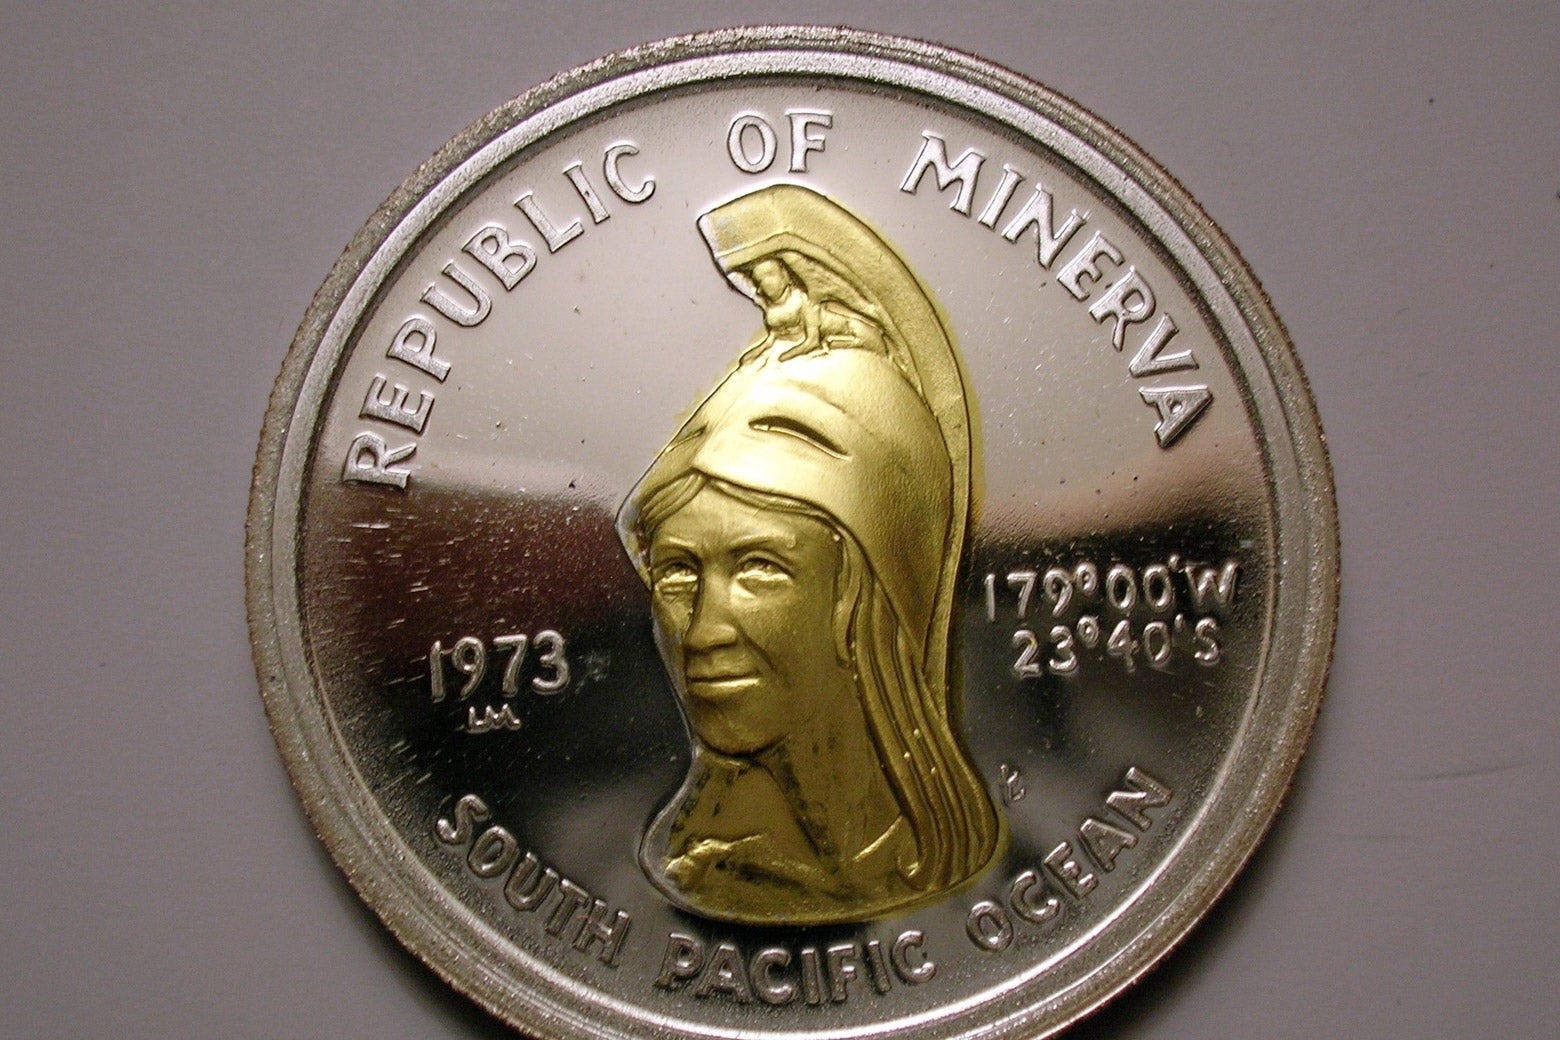 A Minerva coin depicting a golden woman in a helmet